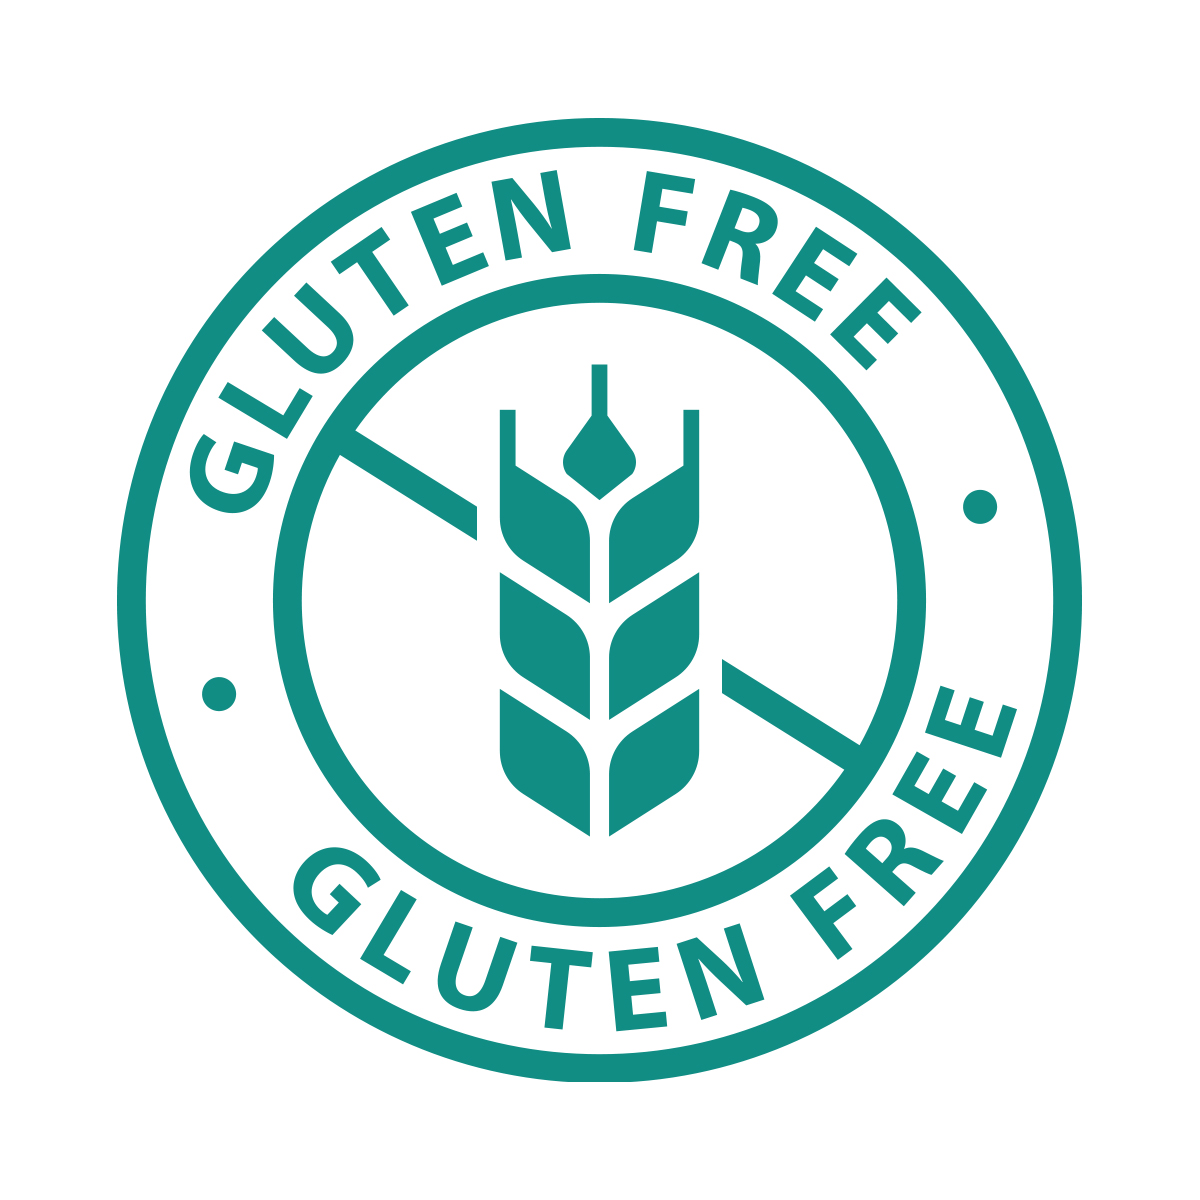 gluten free logo vector